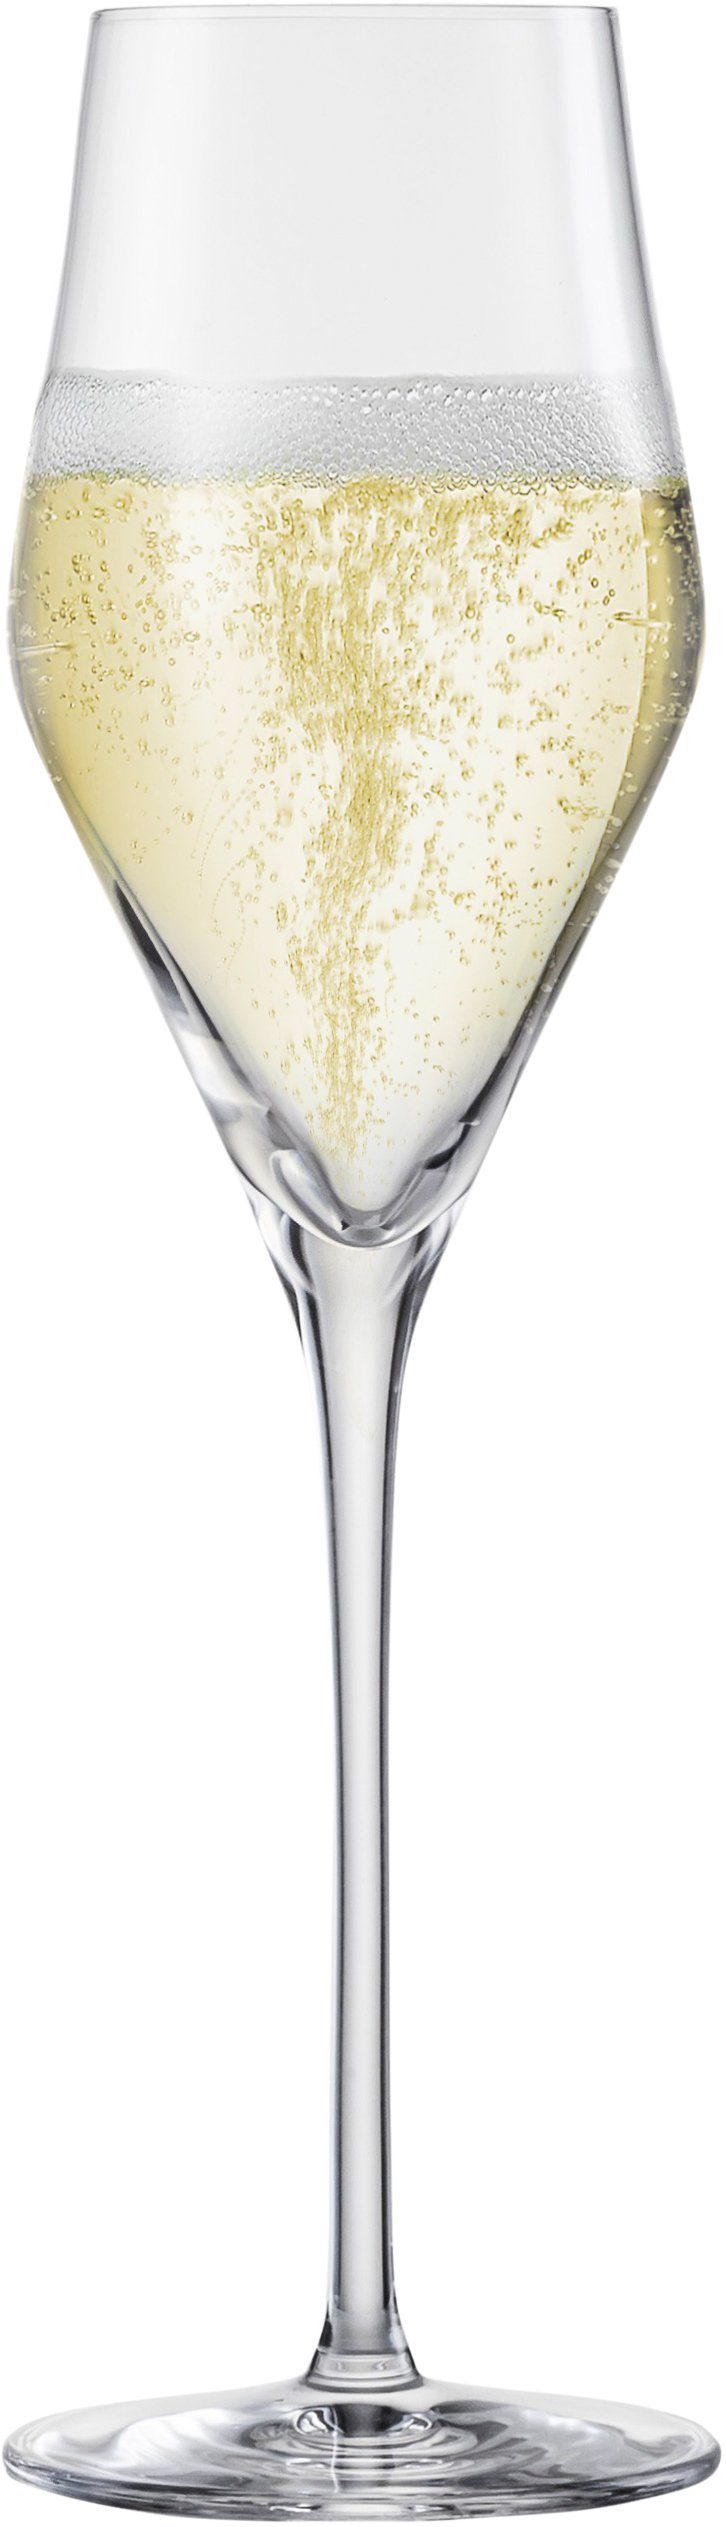 Champagnerglas Kristallglas, Sky bleifrei, SensisPlus, 260 teilig 4- ml, Eisch